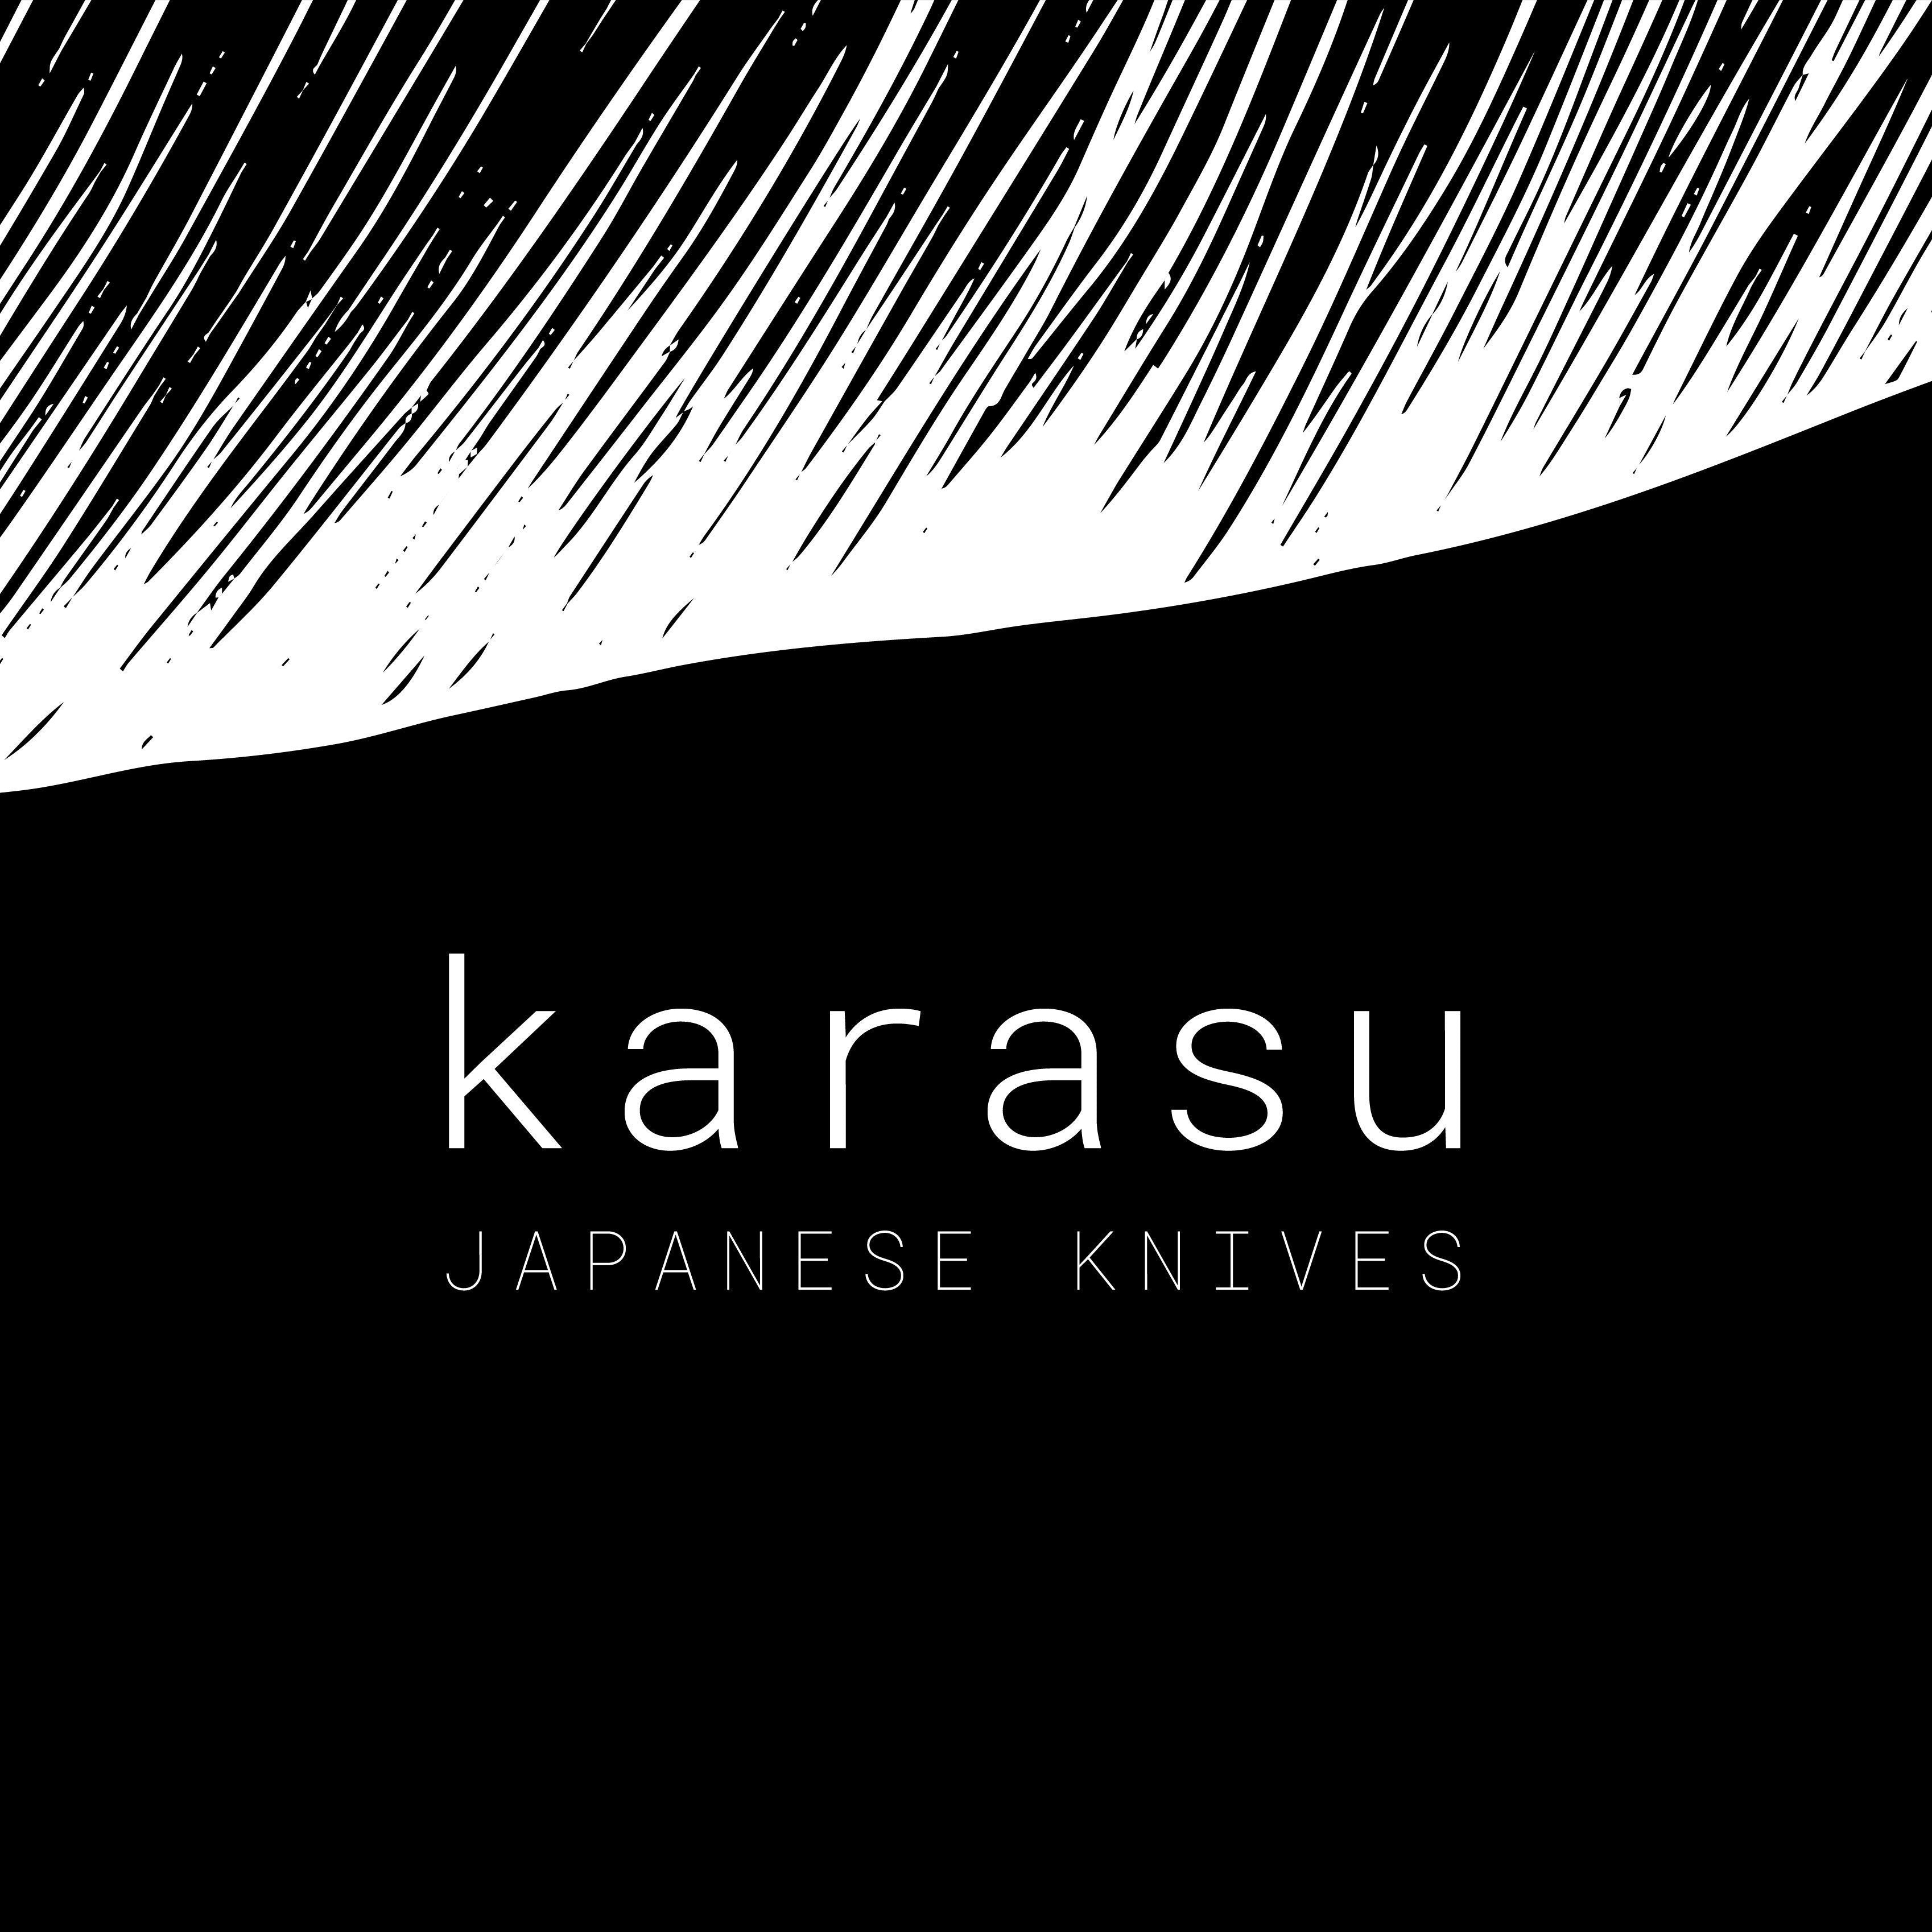 Just in – Karasu Japanese knives